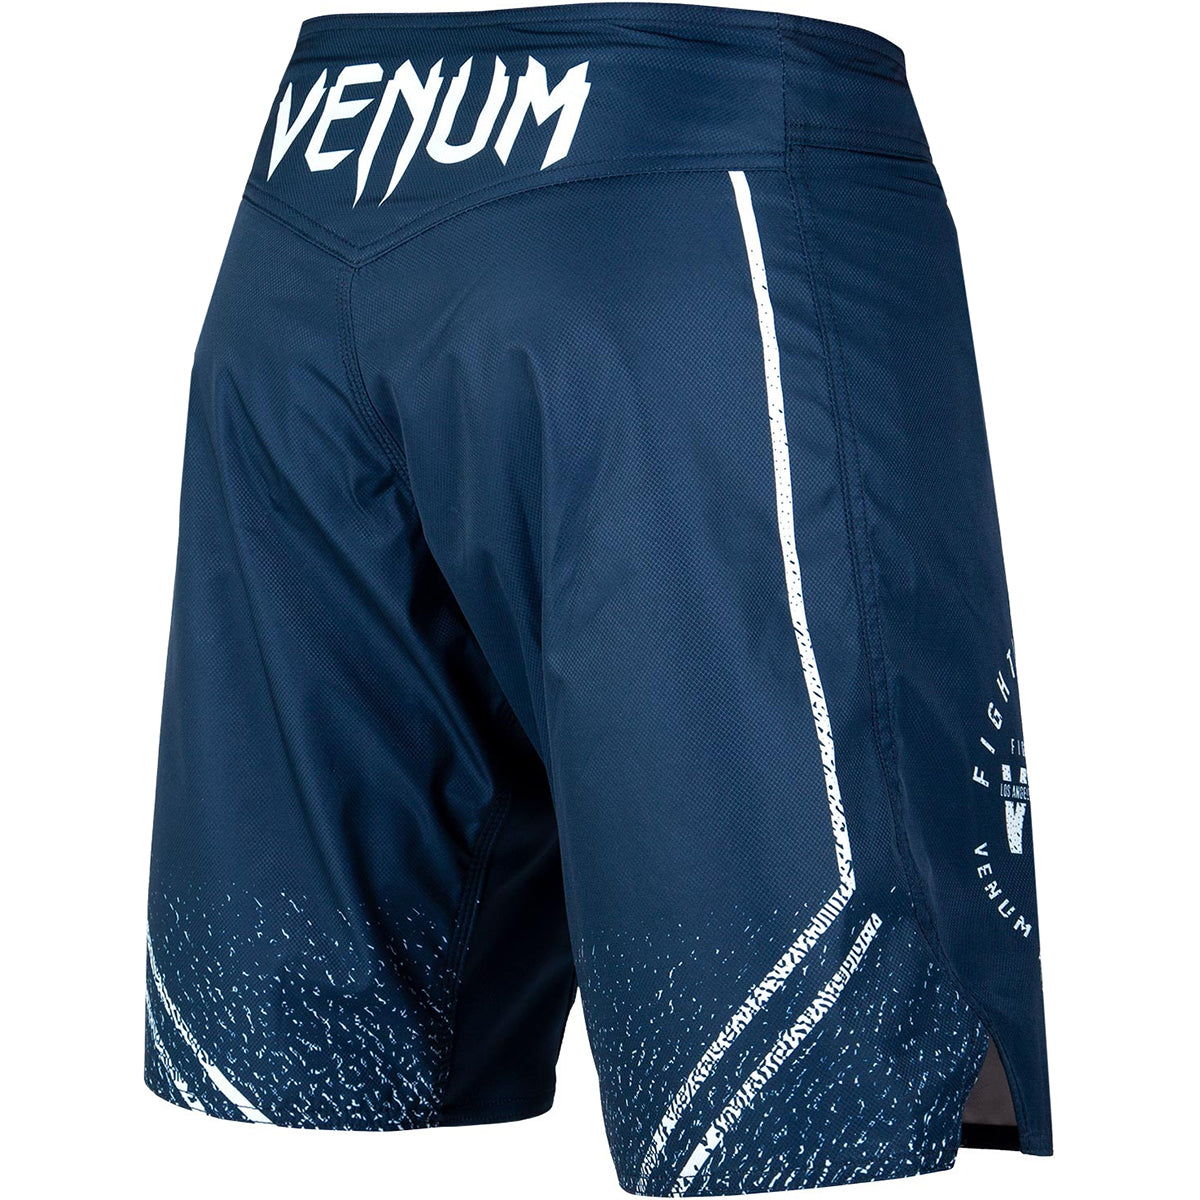 Venum Signature MMA Fight Shorts - Navy Blue/White Venum